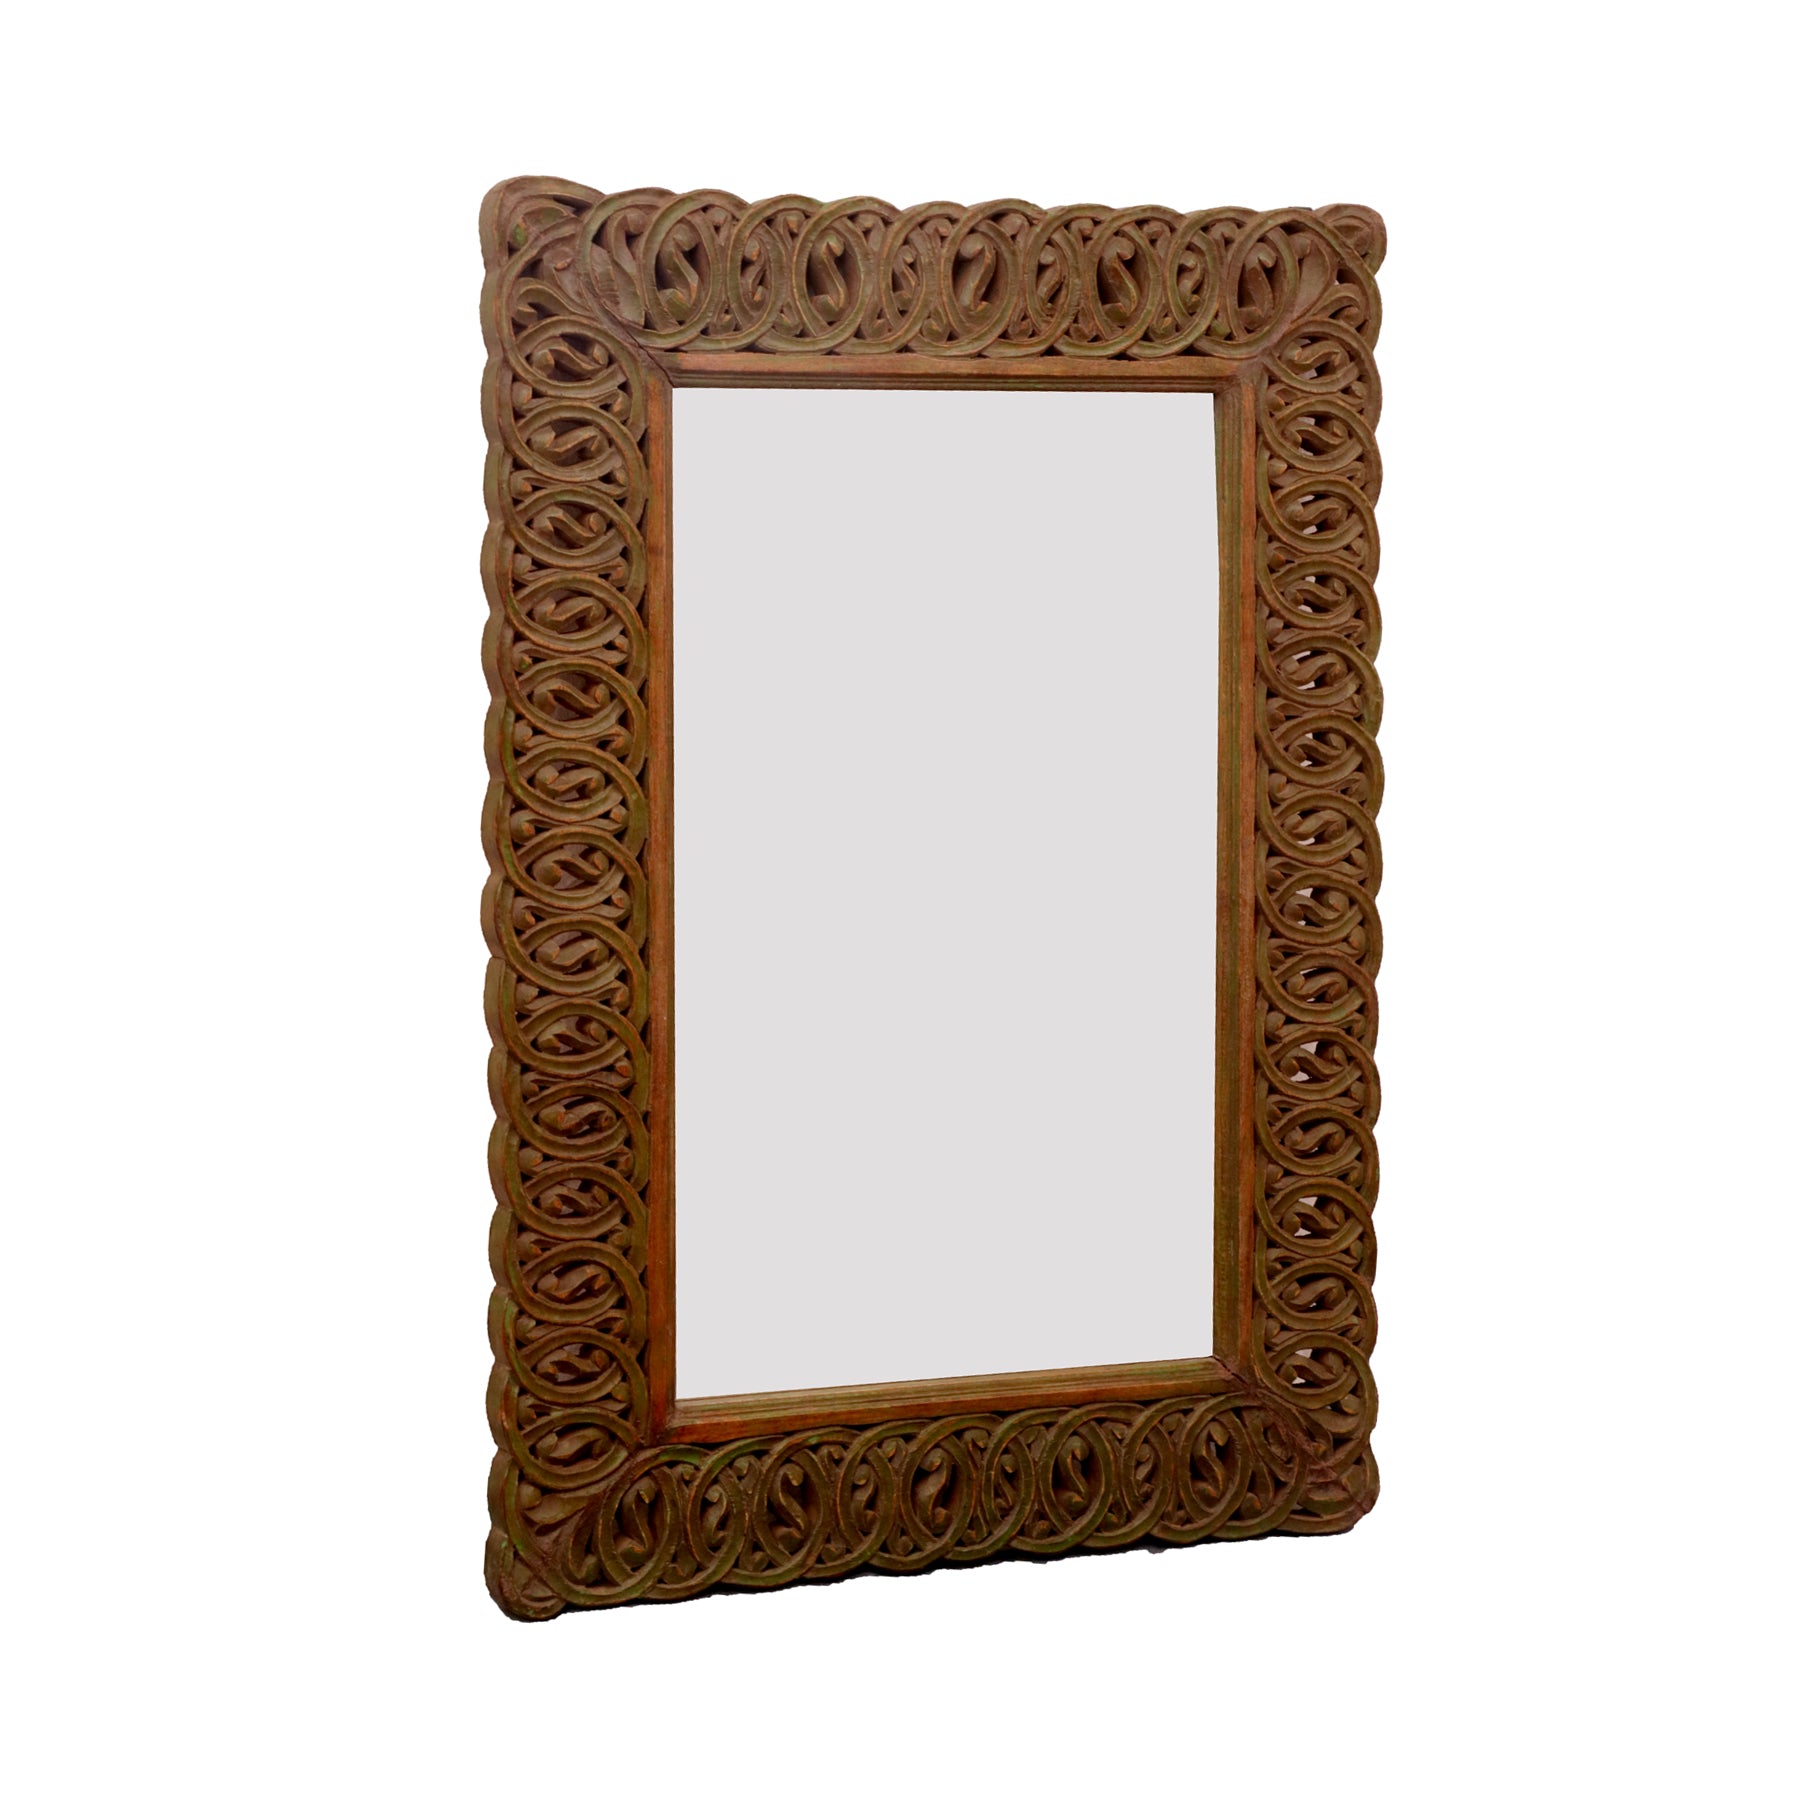 Solid Wood Royal Mirror Frame Mirror